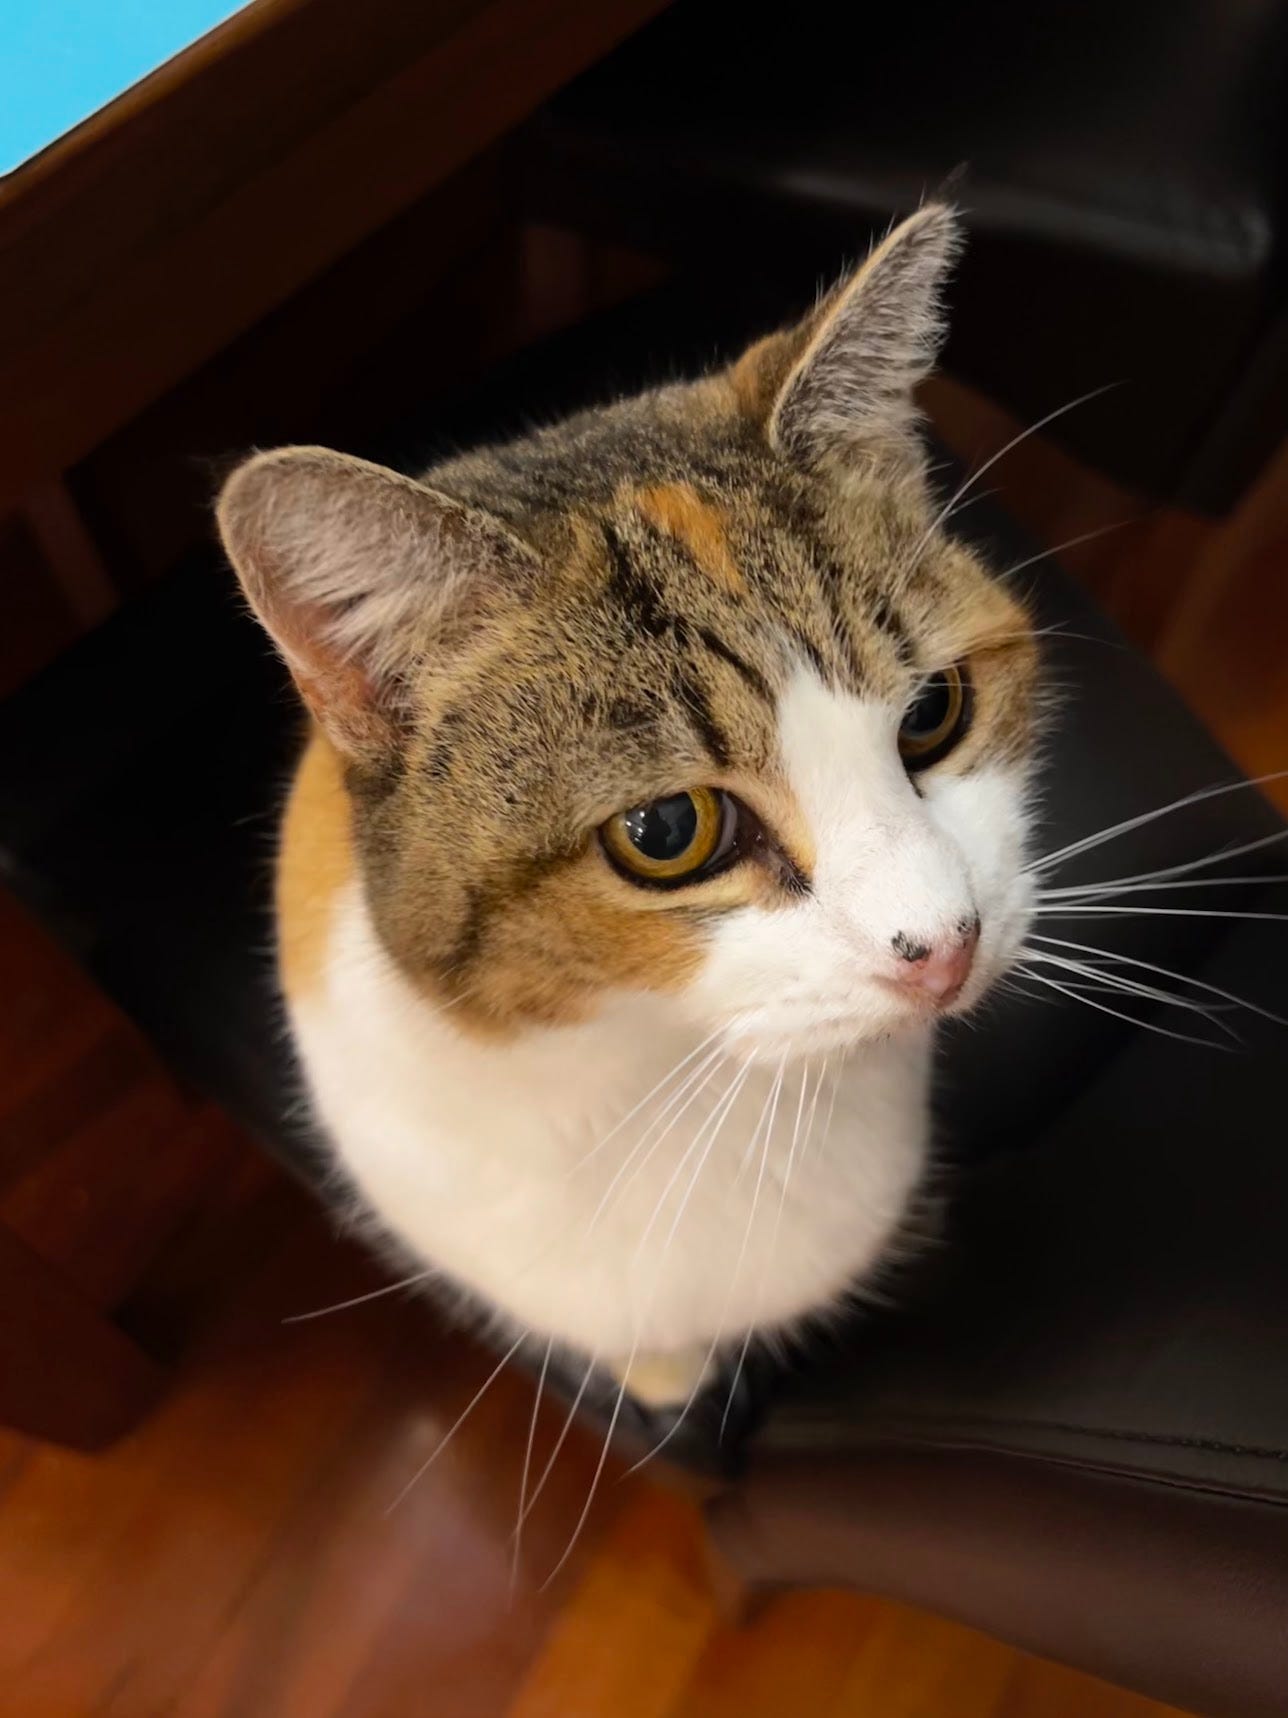 A photo of a beautiful calico cat.